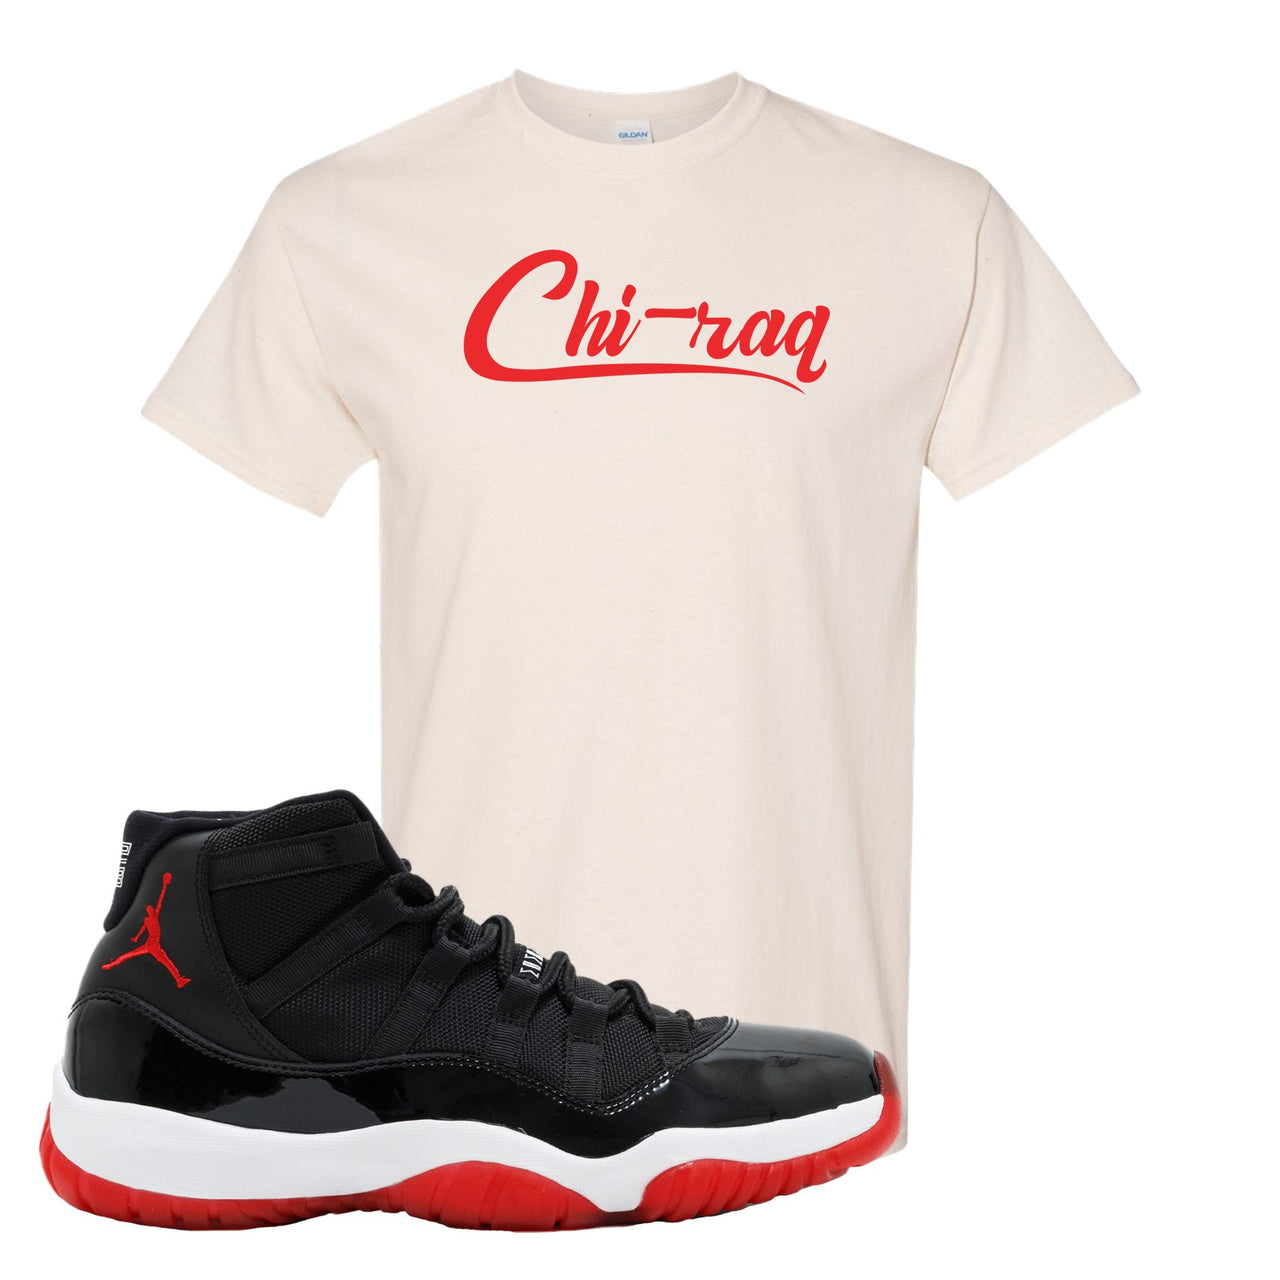 Jordan 11 Bred Chi-raq White Sneaker Hook Up T-Shirt